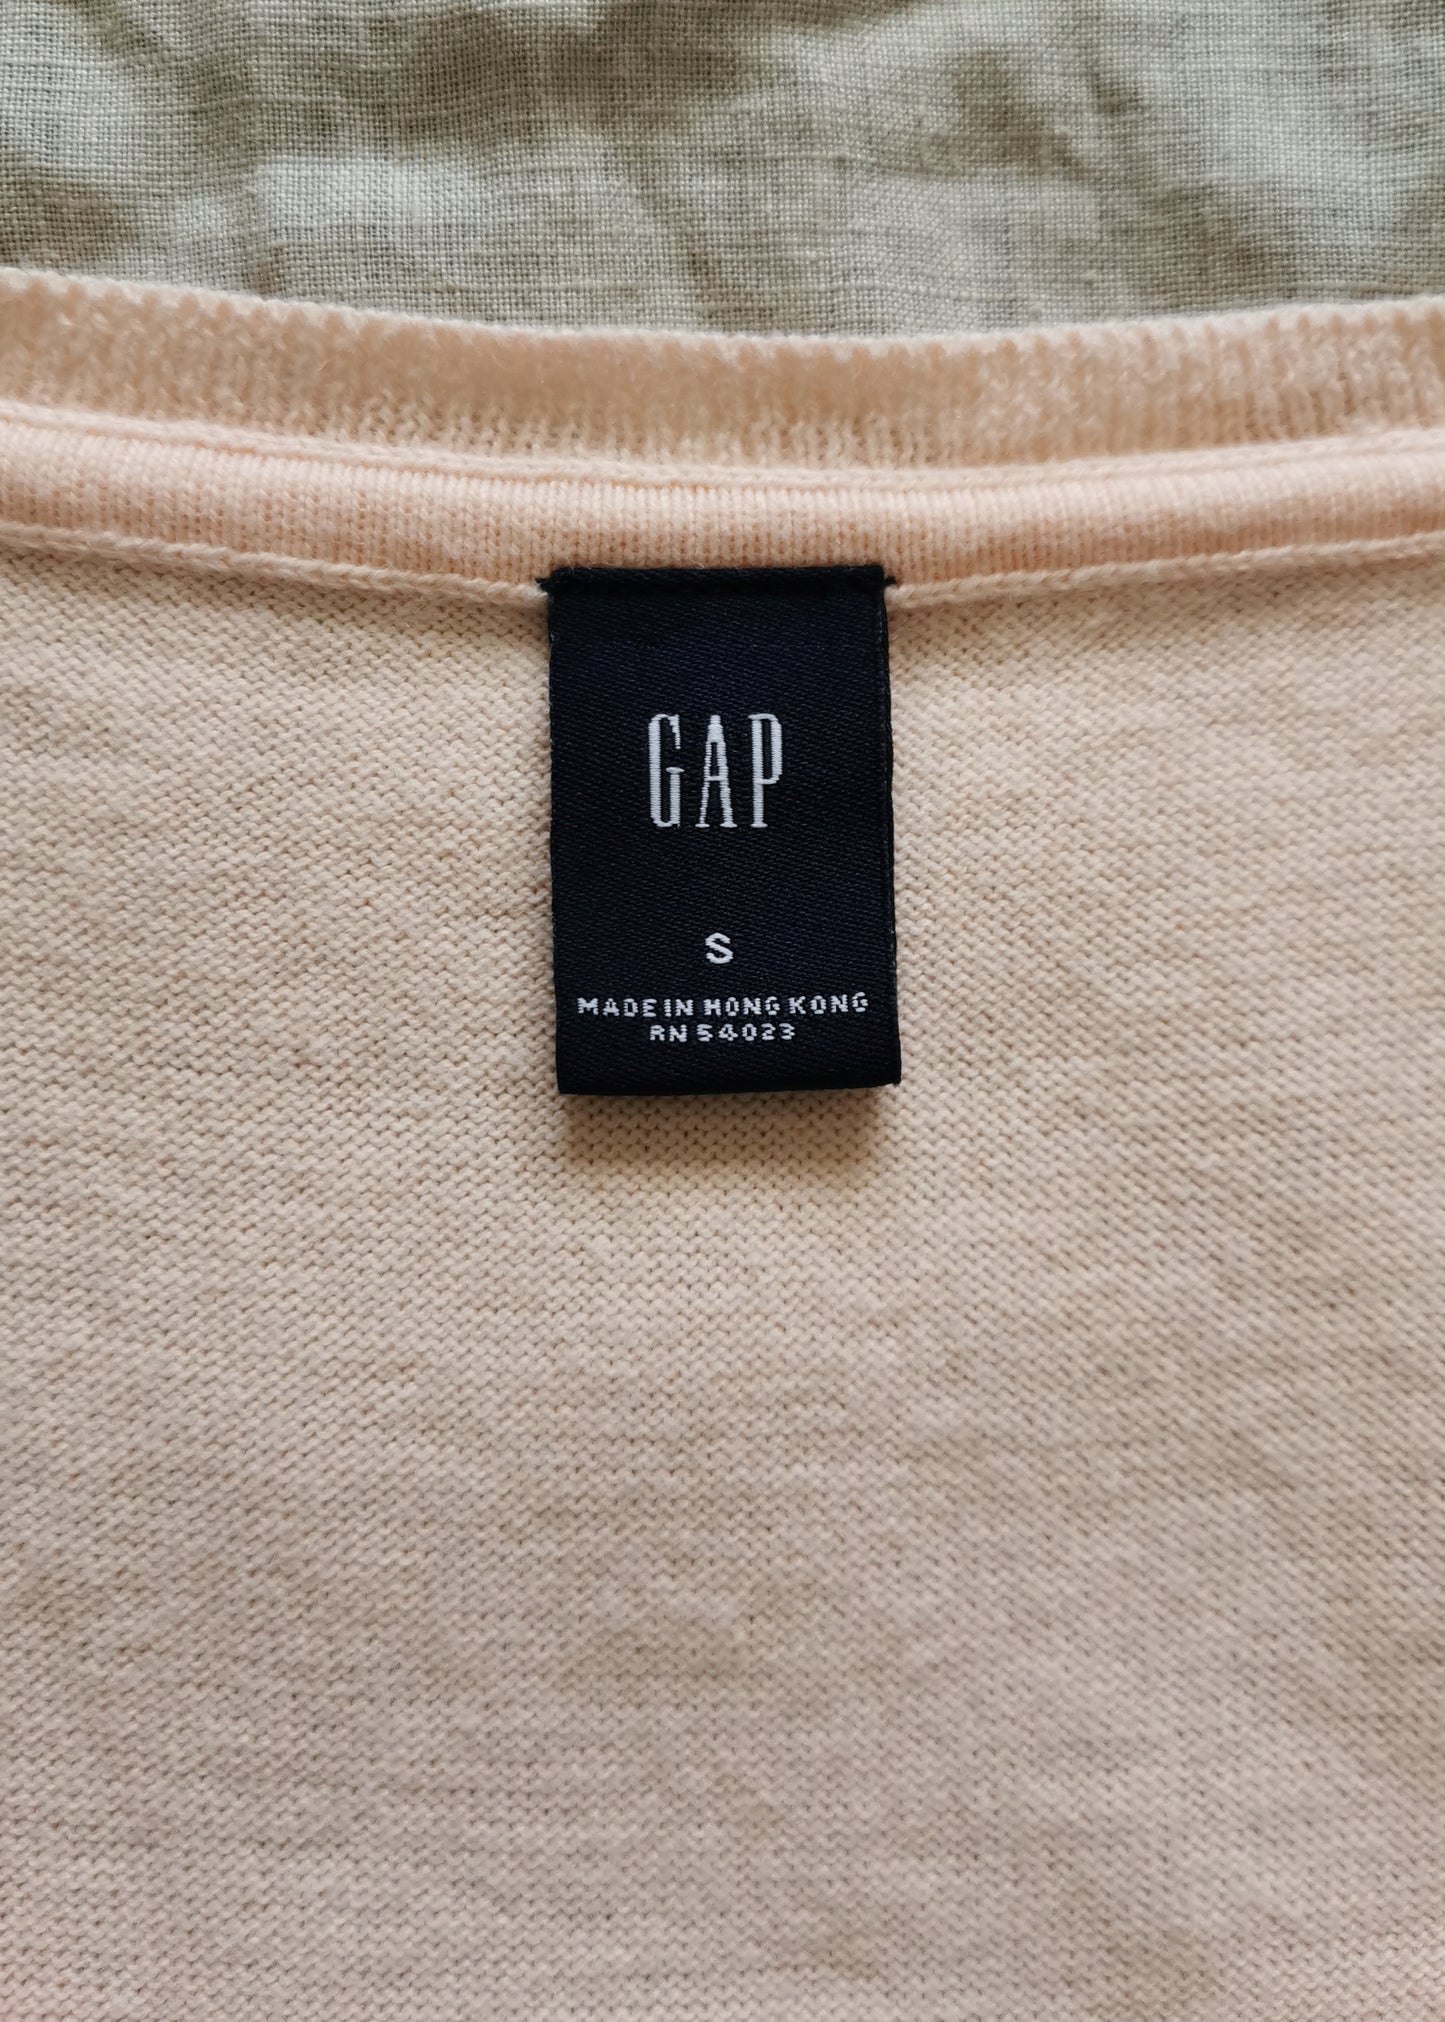 Gap Cotton & Wool Top (S)